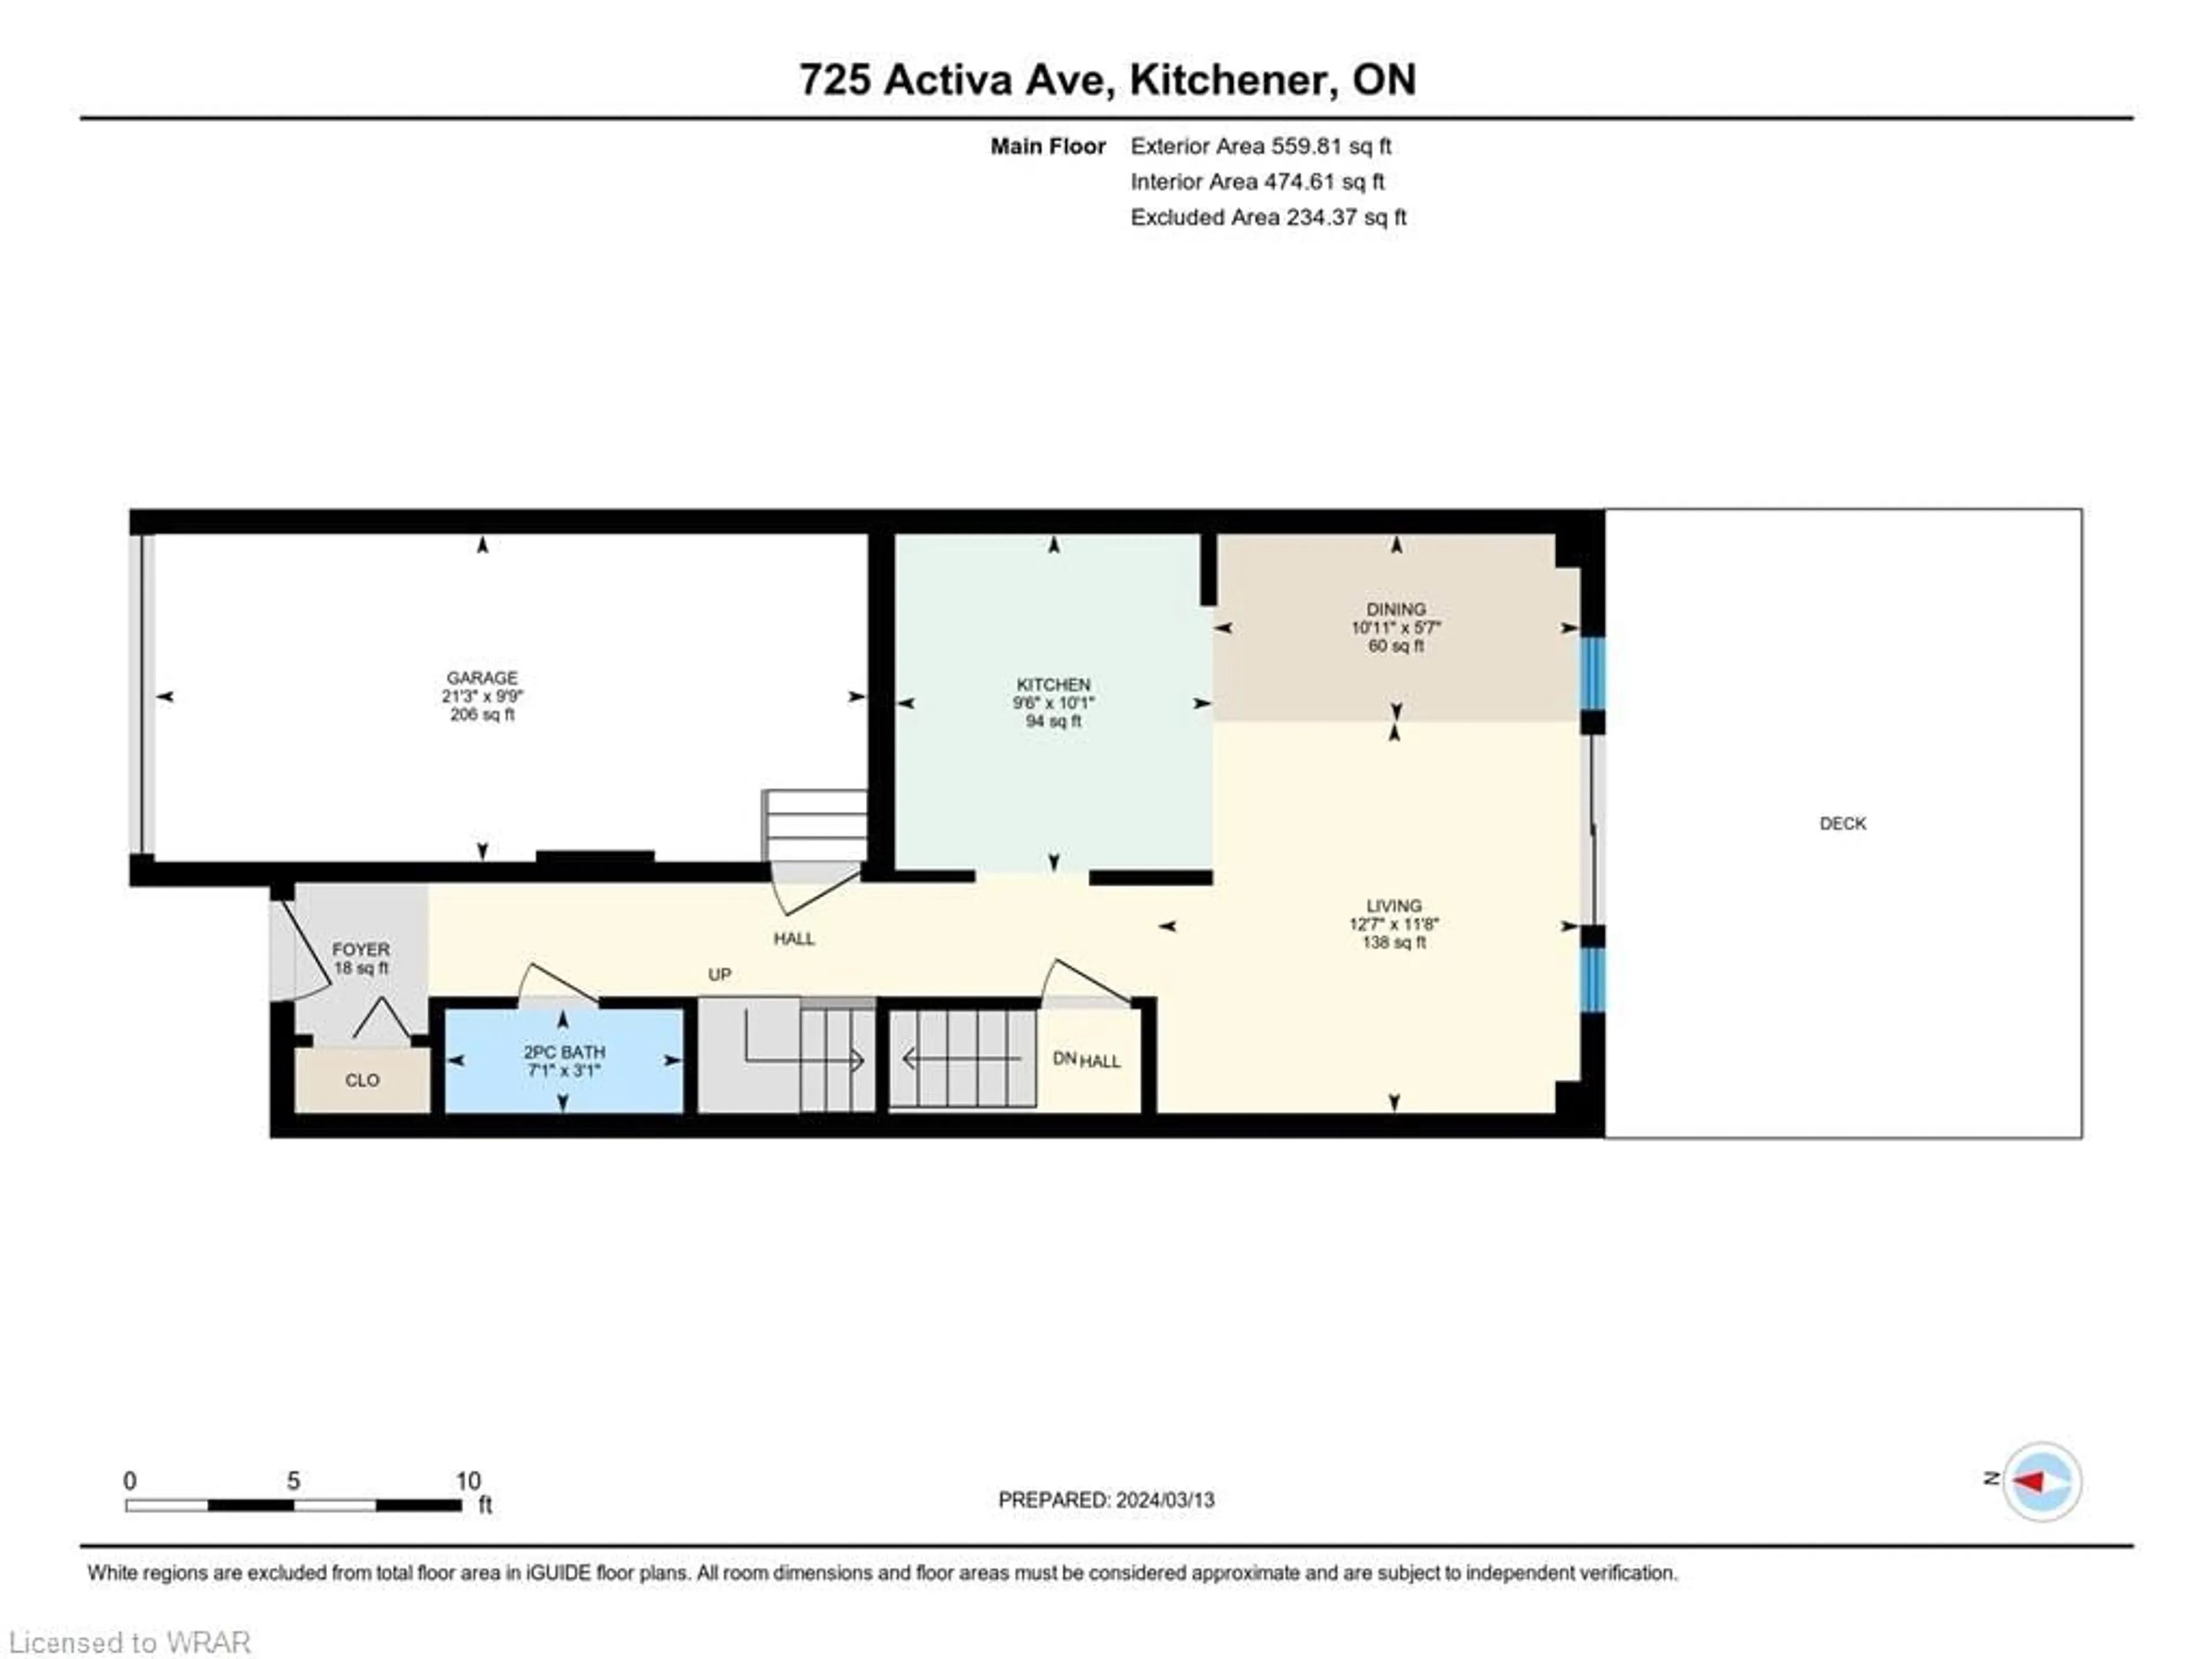 Floor plan for 725 Activa Ave, Kitchener Ontario N2E 4C5